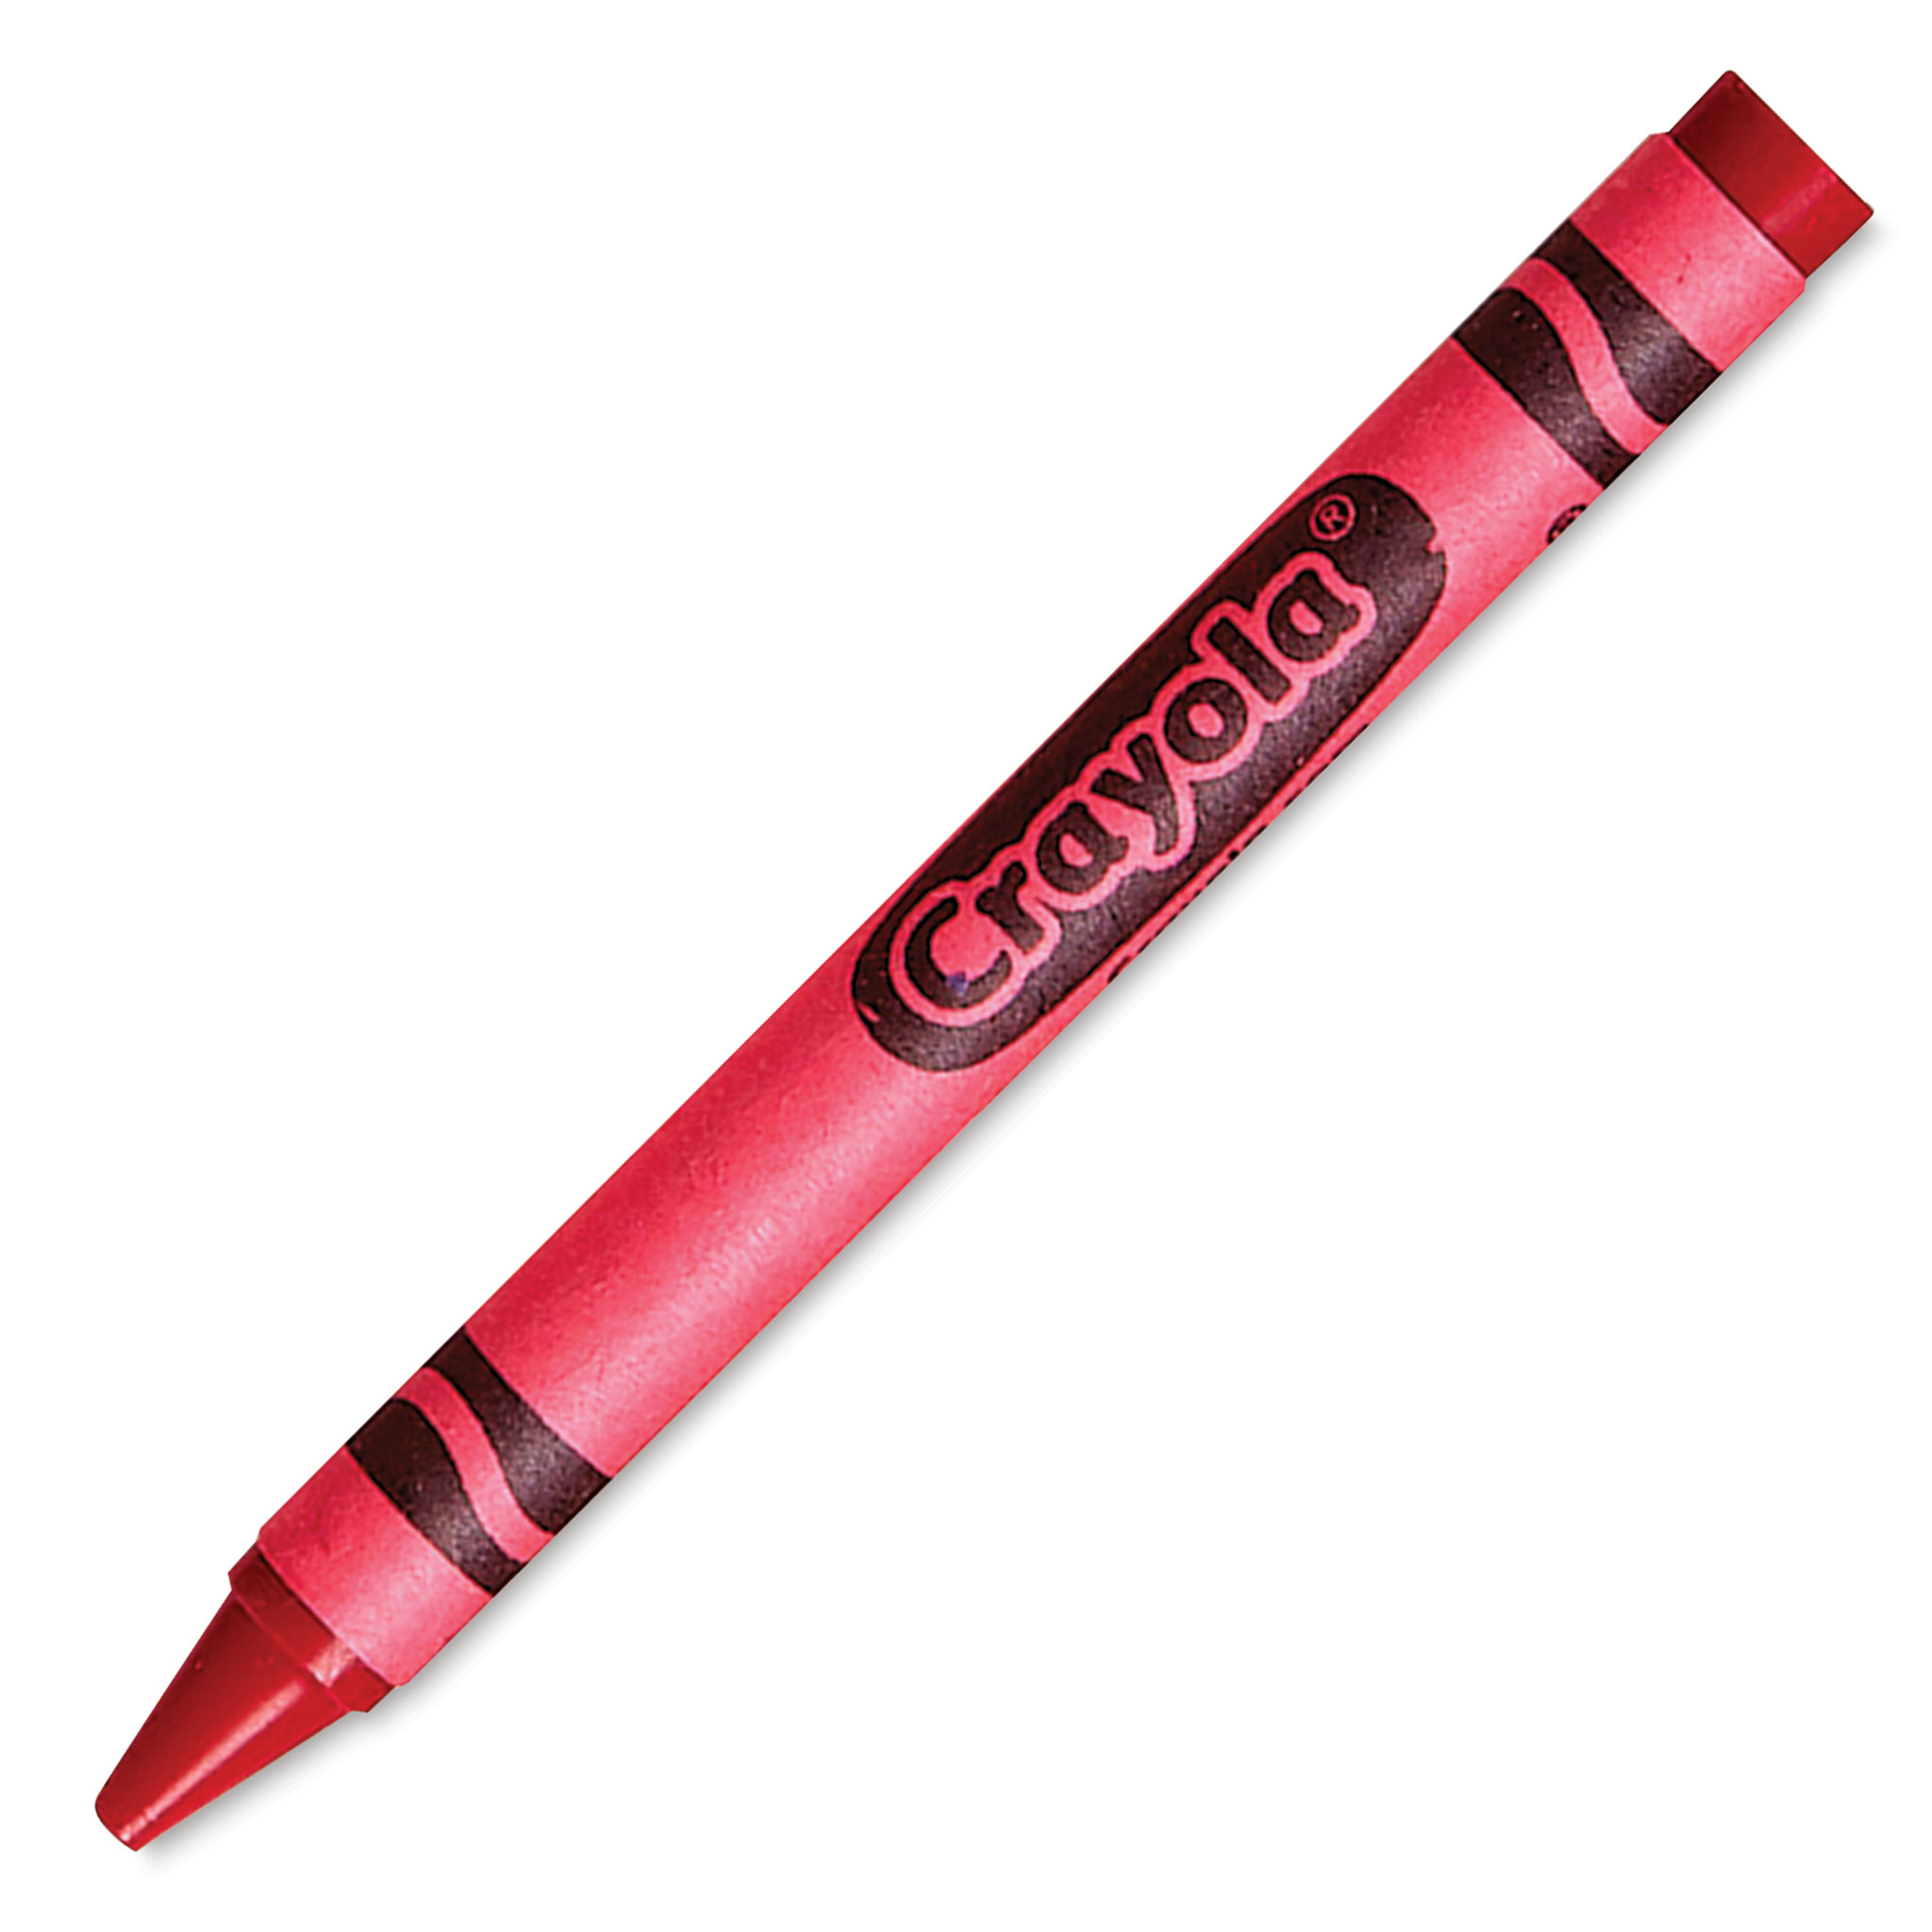 Crayola Crayons - Carnation Pink, Box of 12